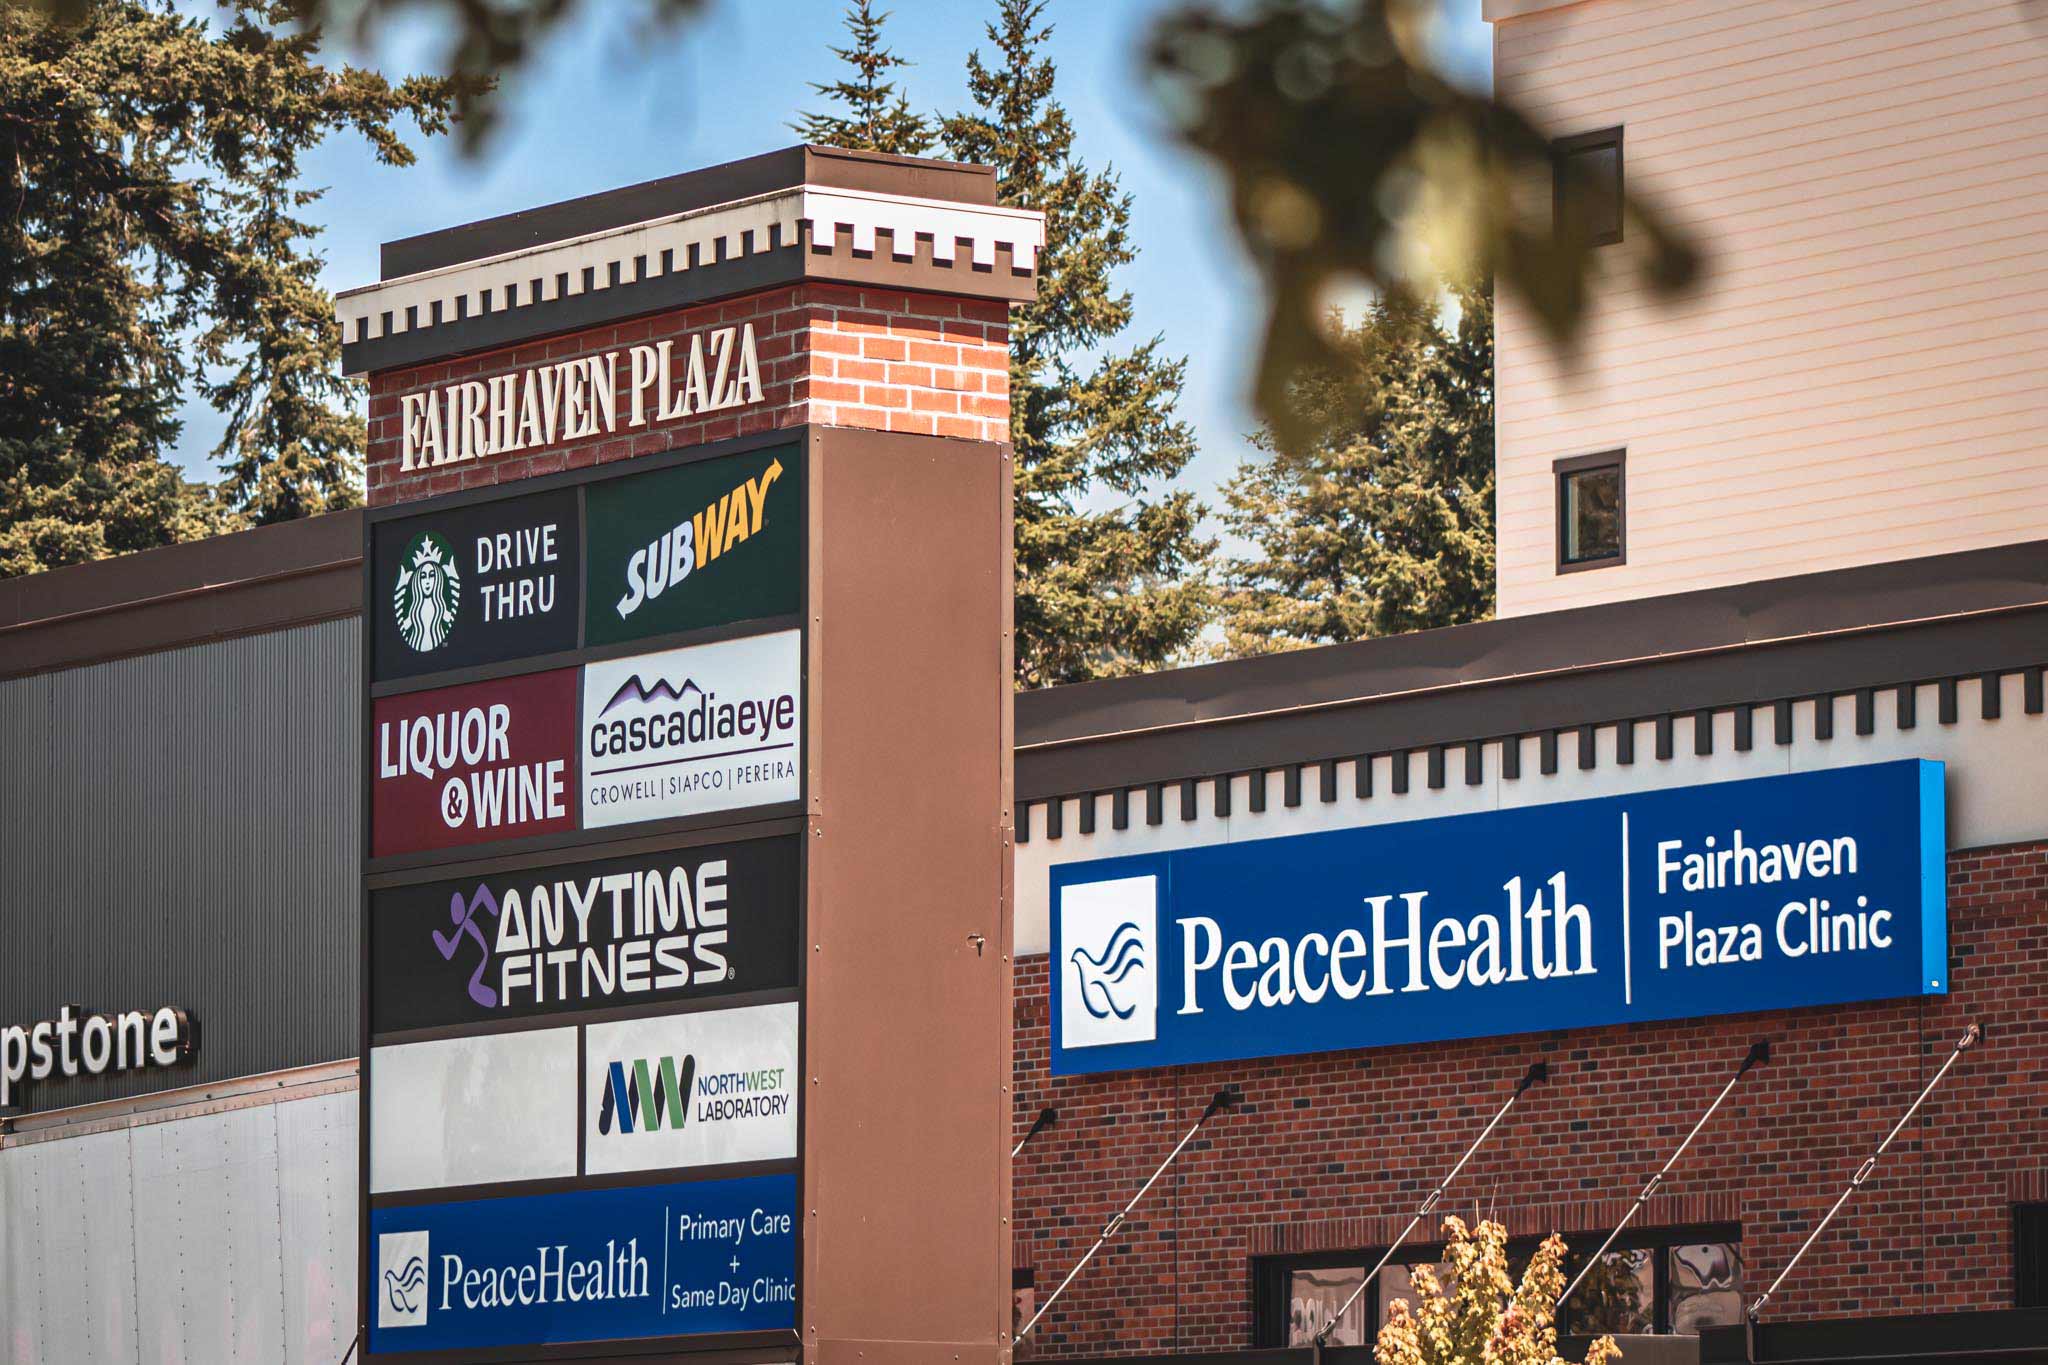 healthcare-peace-health-fairhaven-plaza-clinic-monument-sign-graphics